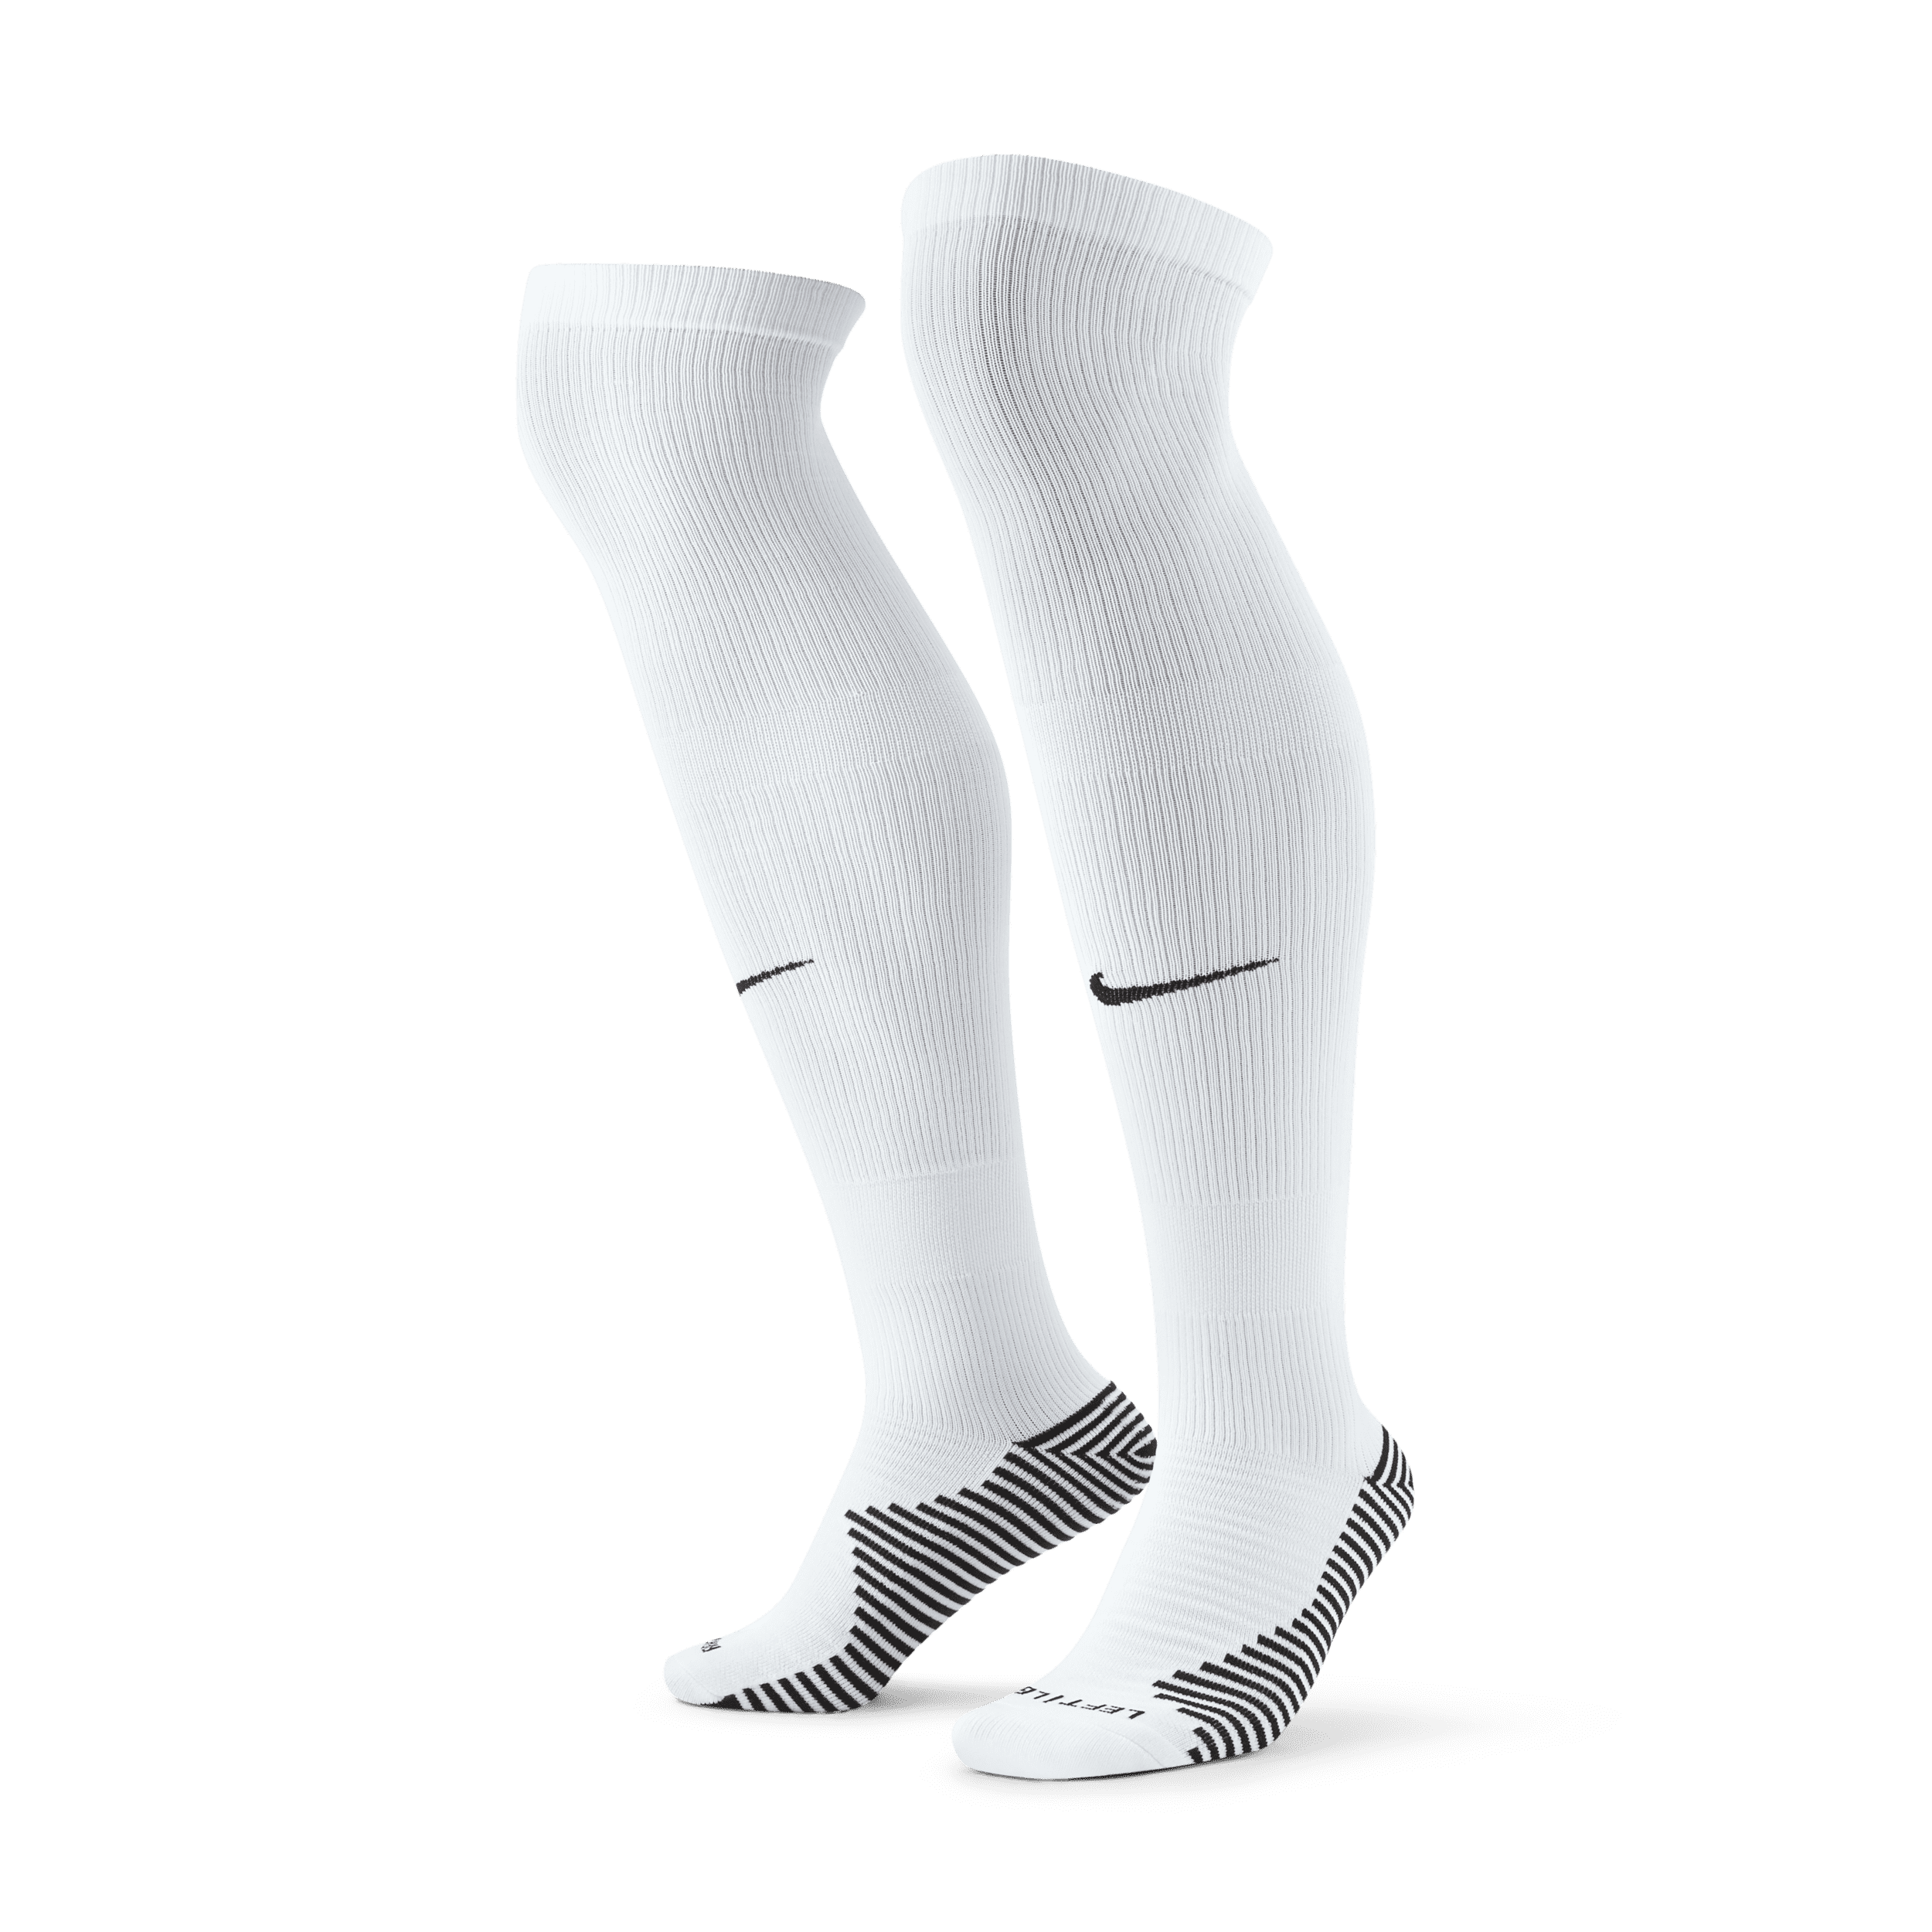 Nike MatchFit voetbalkniekousen - Wit